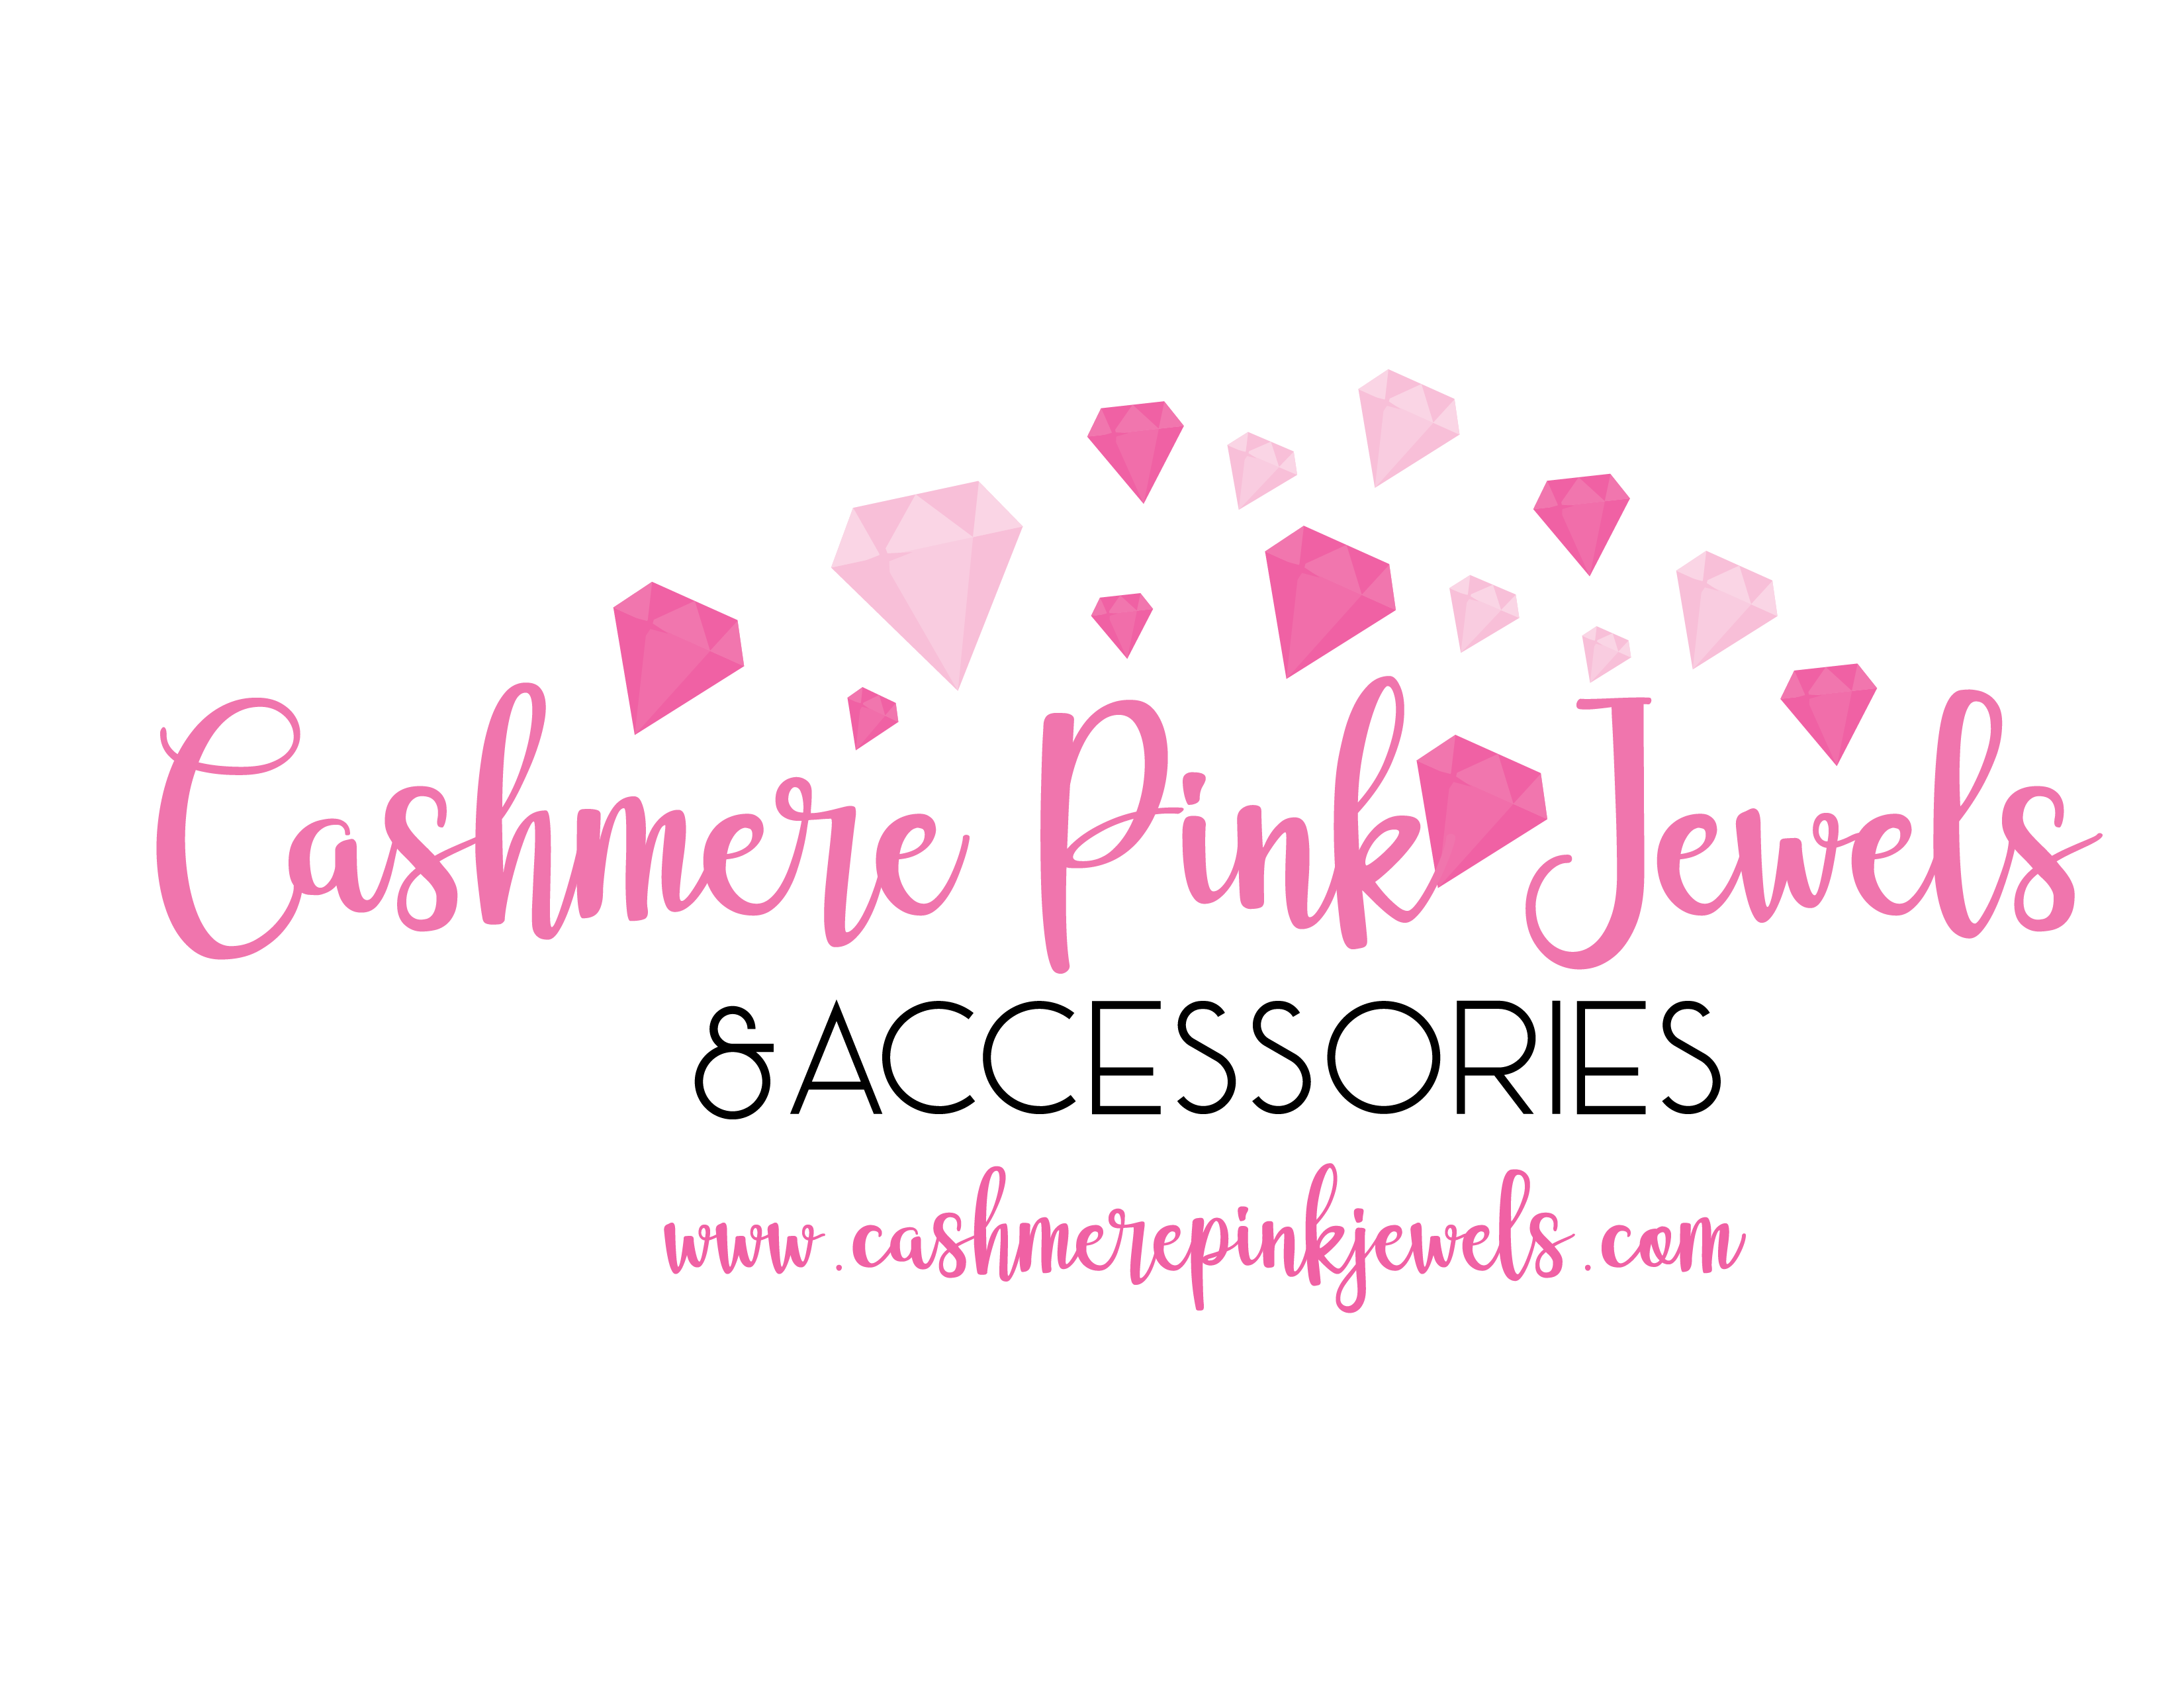 Cashmere Pink Jewels & Accessories